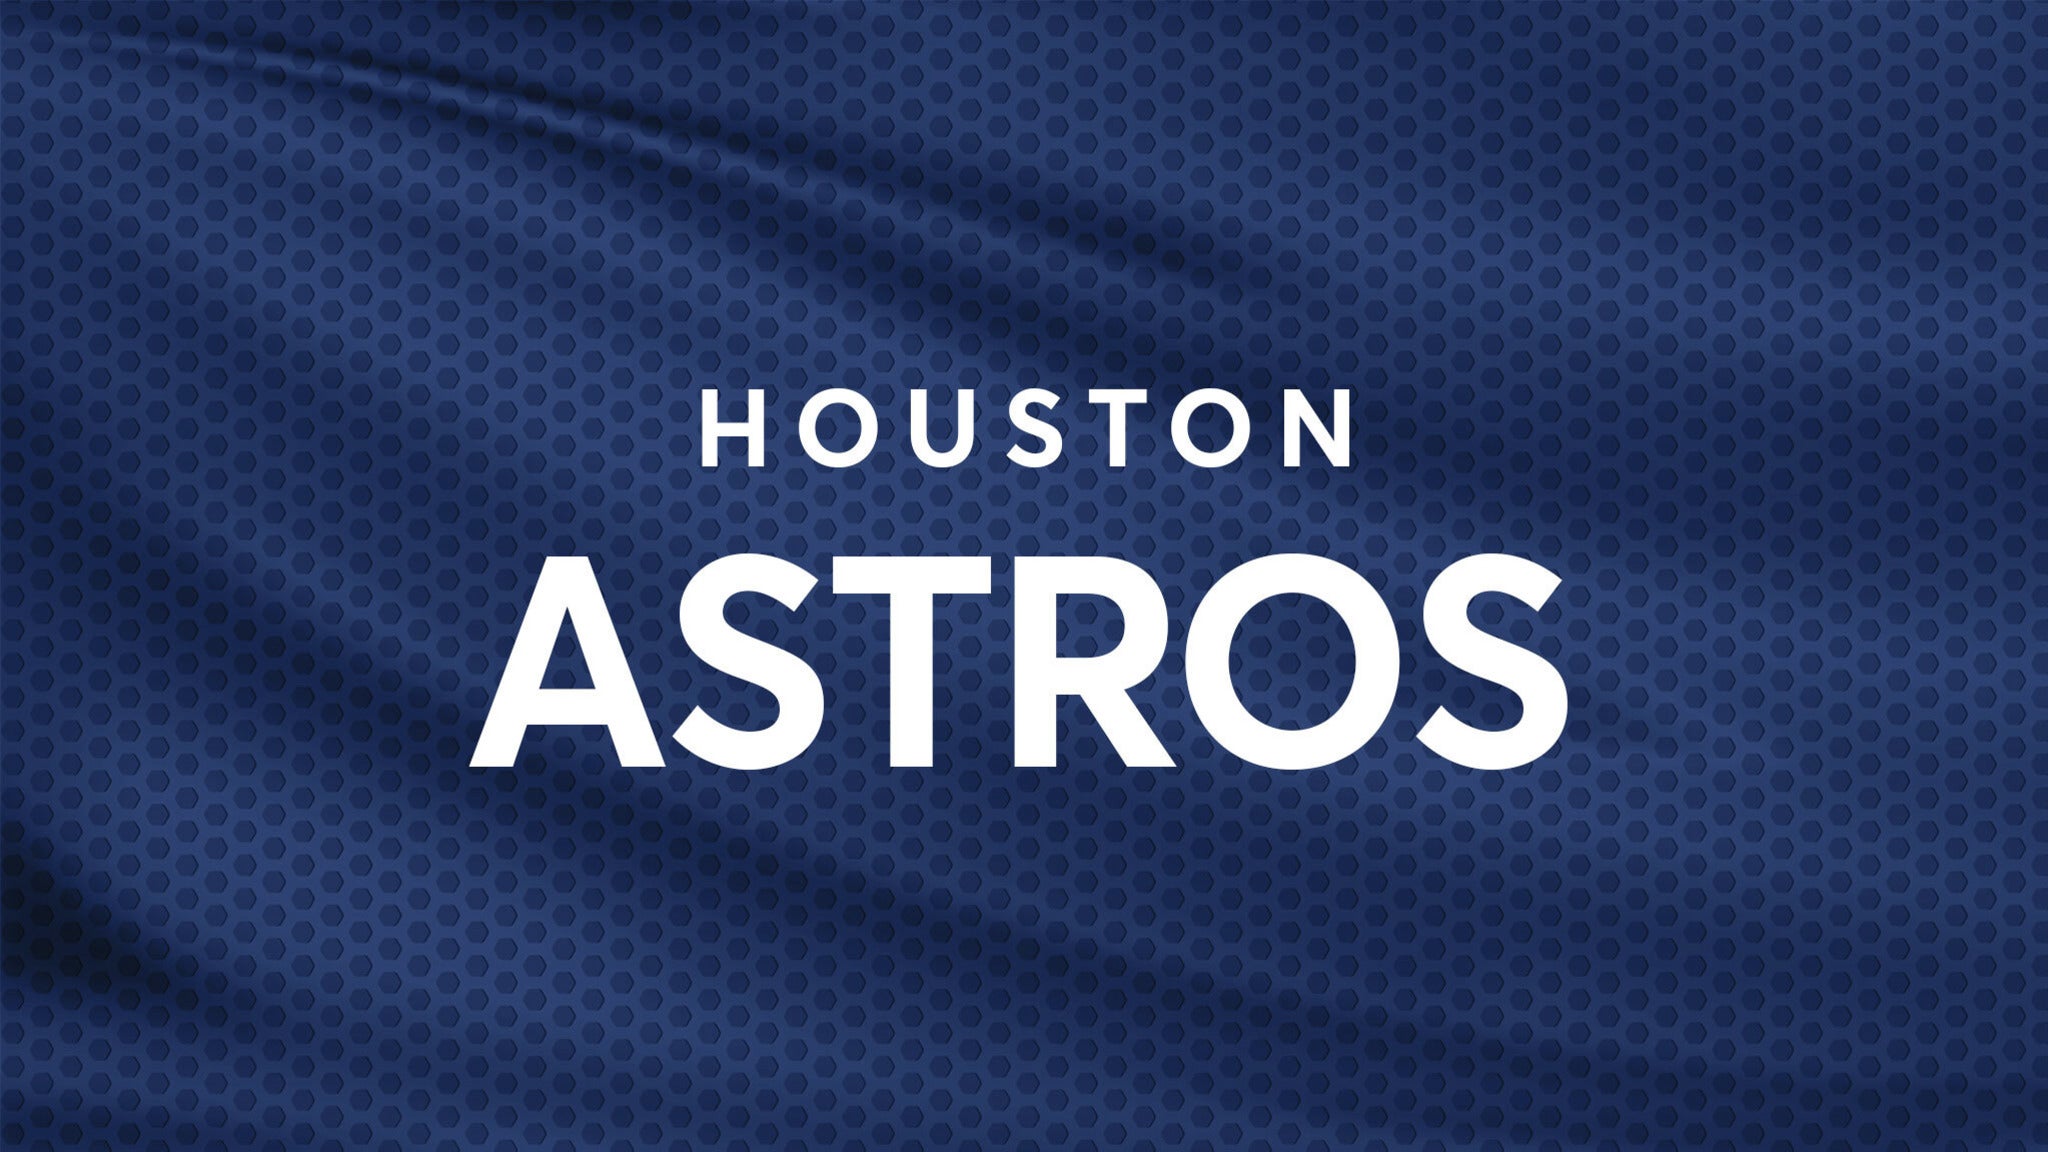 Houston Astros vs. Kansas City Royals at Minute Maid Park